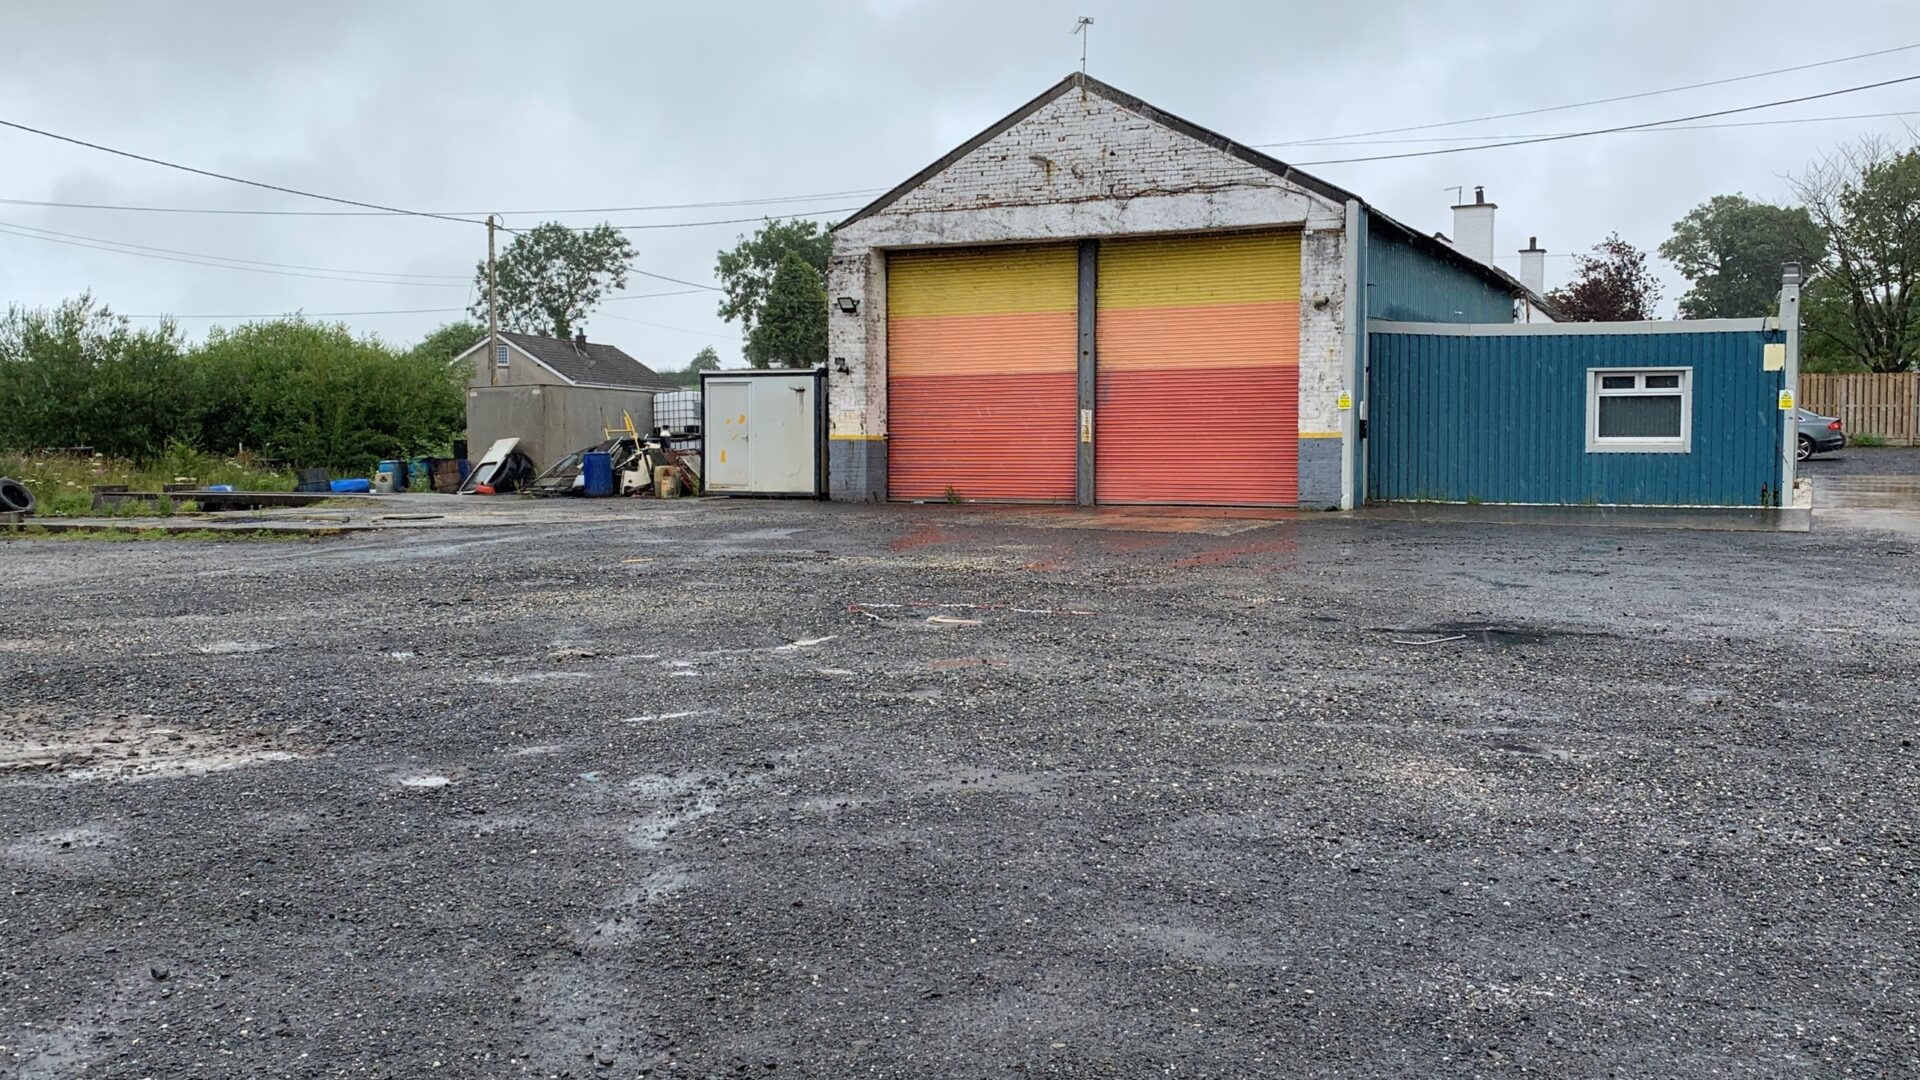 Shepherd brings to market Darwin Garage workshop premises on prominent roadside location by Ayr for sale or lease